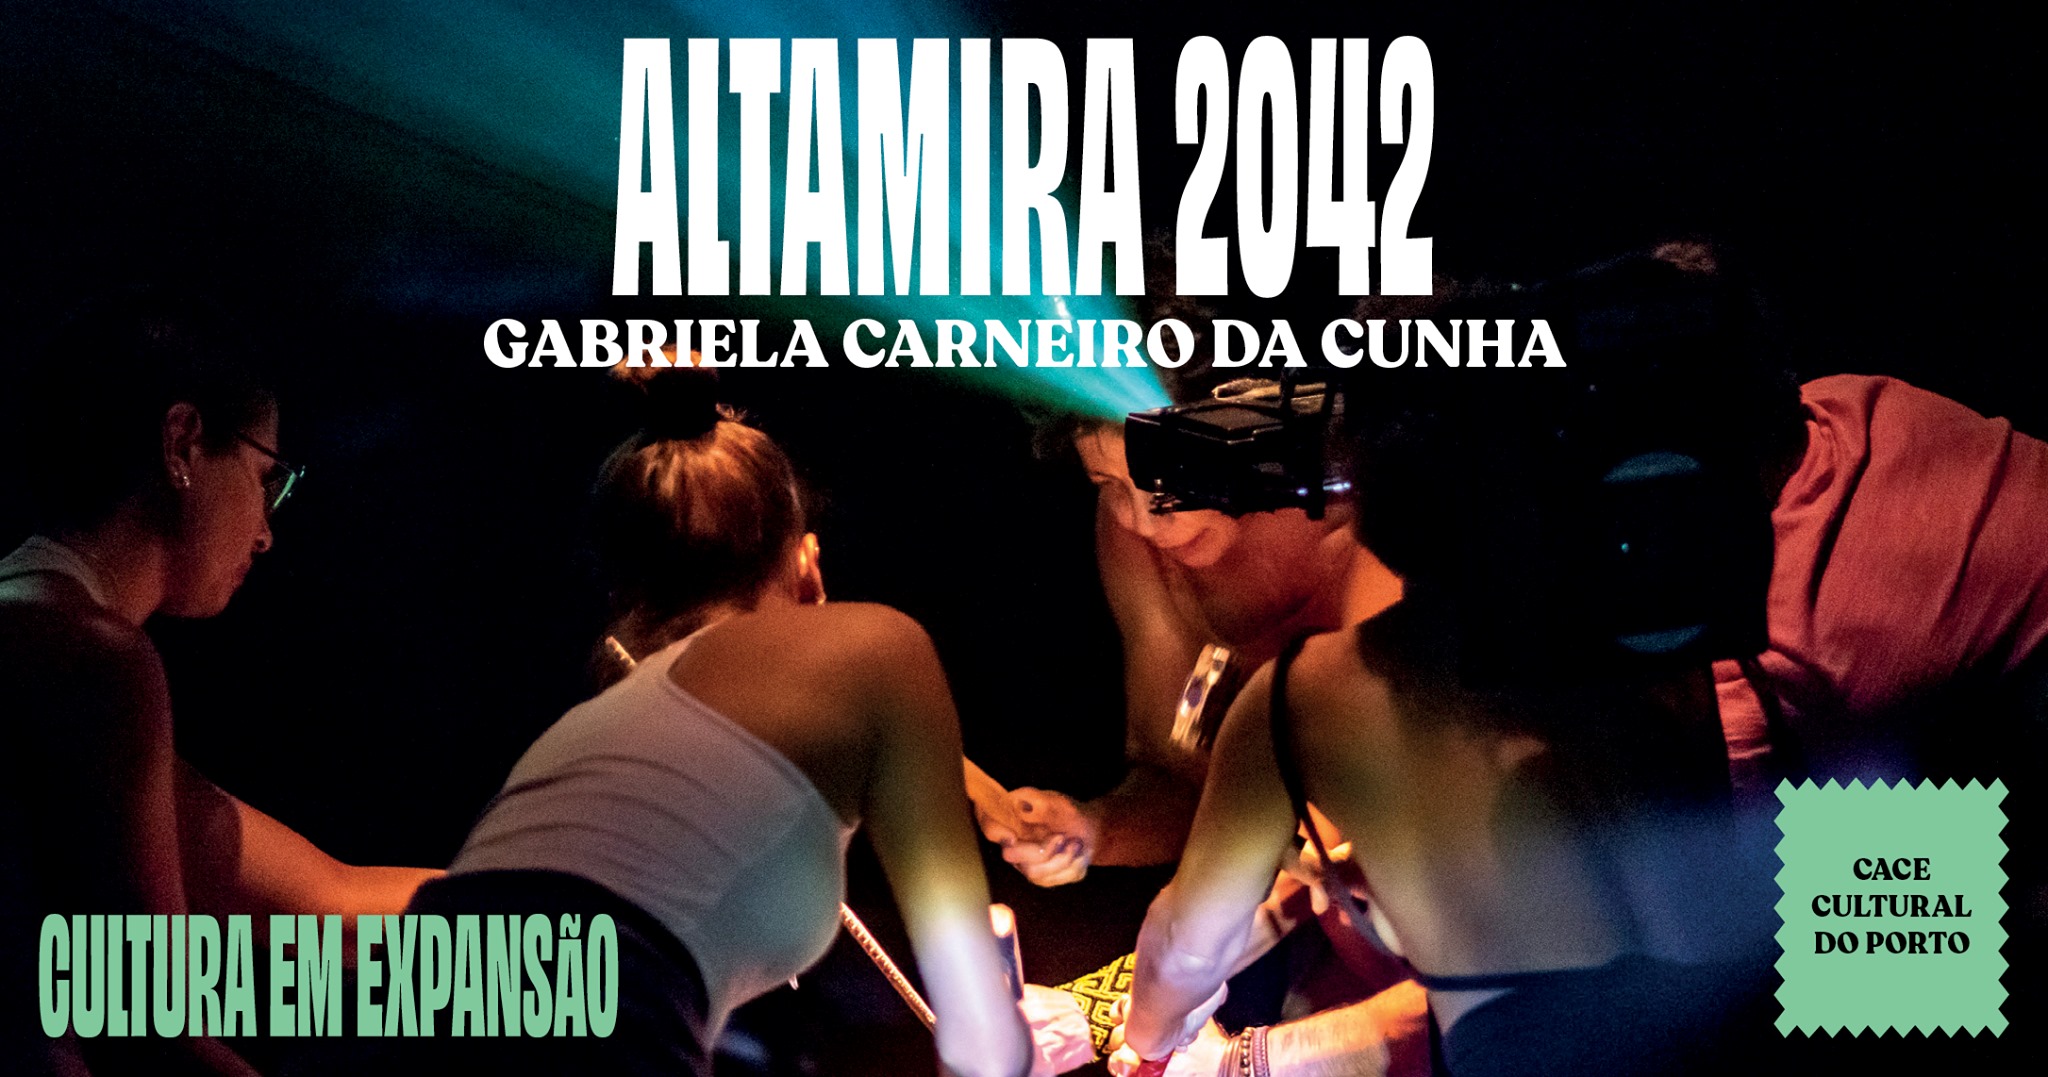 ALTAMIRA 2042 | GABRIELA CARNEIRO DA CUNHA